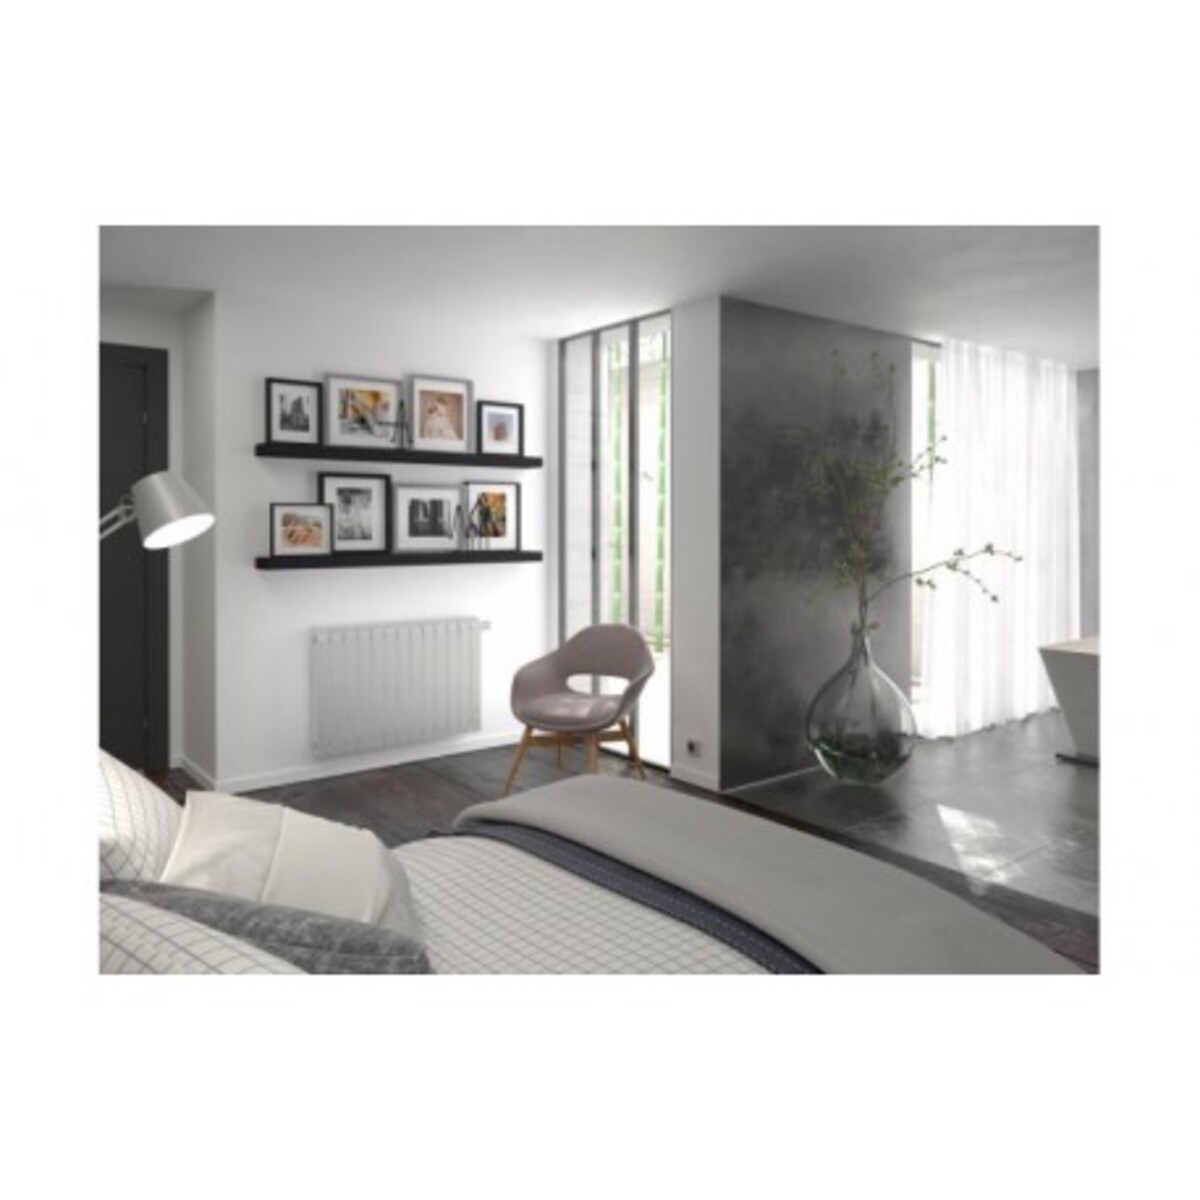 Radiateur thermor chaleur douce - mythik - thermor horizontal 1500 w blanc granit + étroit